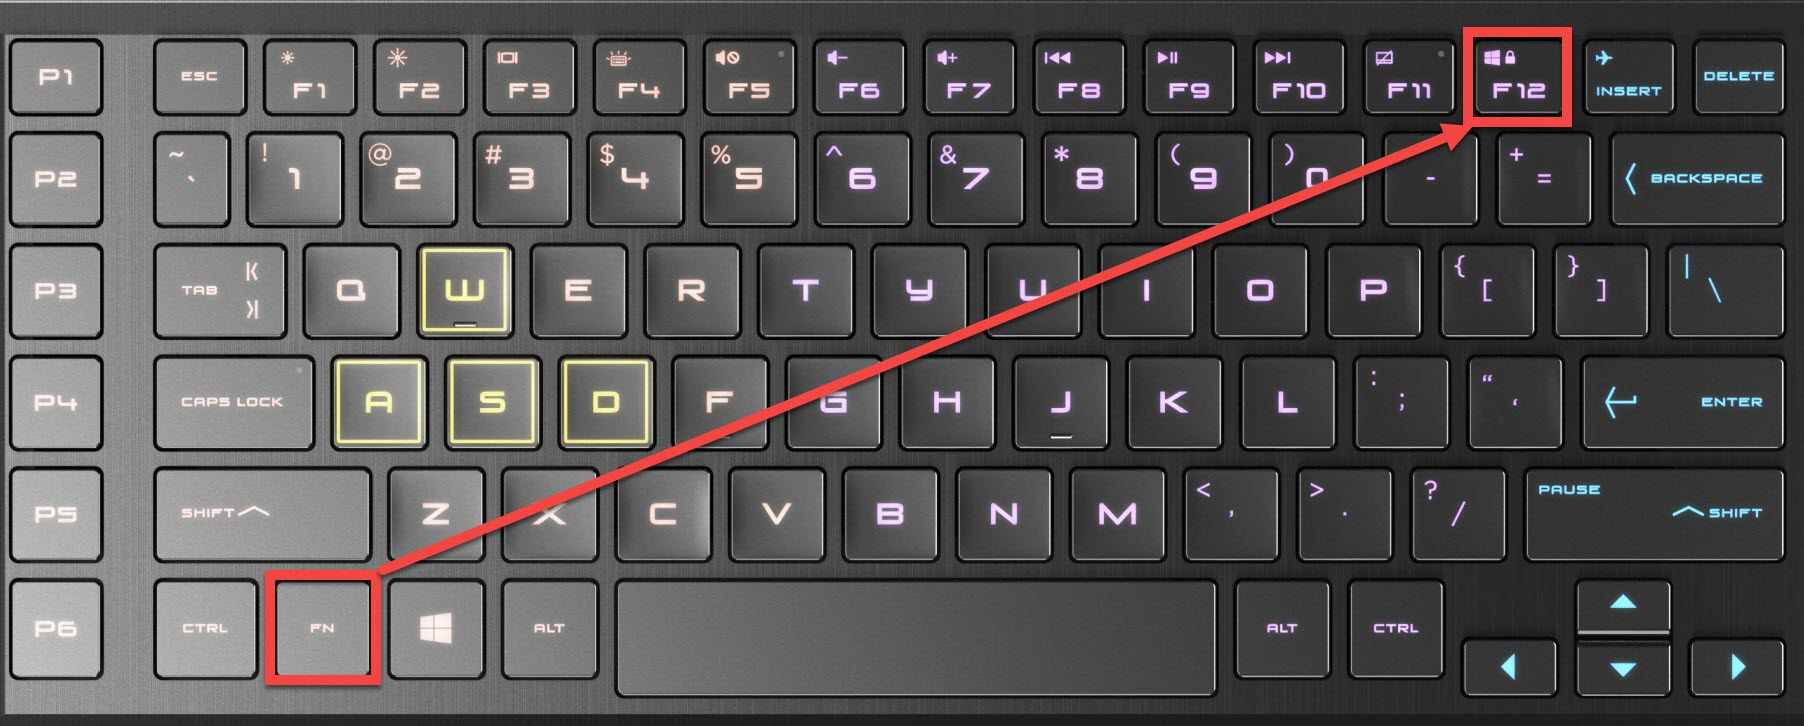 Rfr c hjcbnm. Блокировка клавиатуры на ноутбуке Acer. Клавиатура ноутбука виндовс 10. Кнопка разблокировки клавиатуры на ноутбуке.